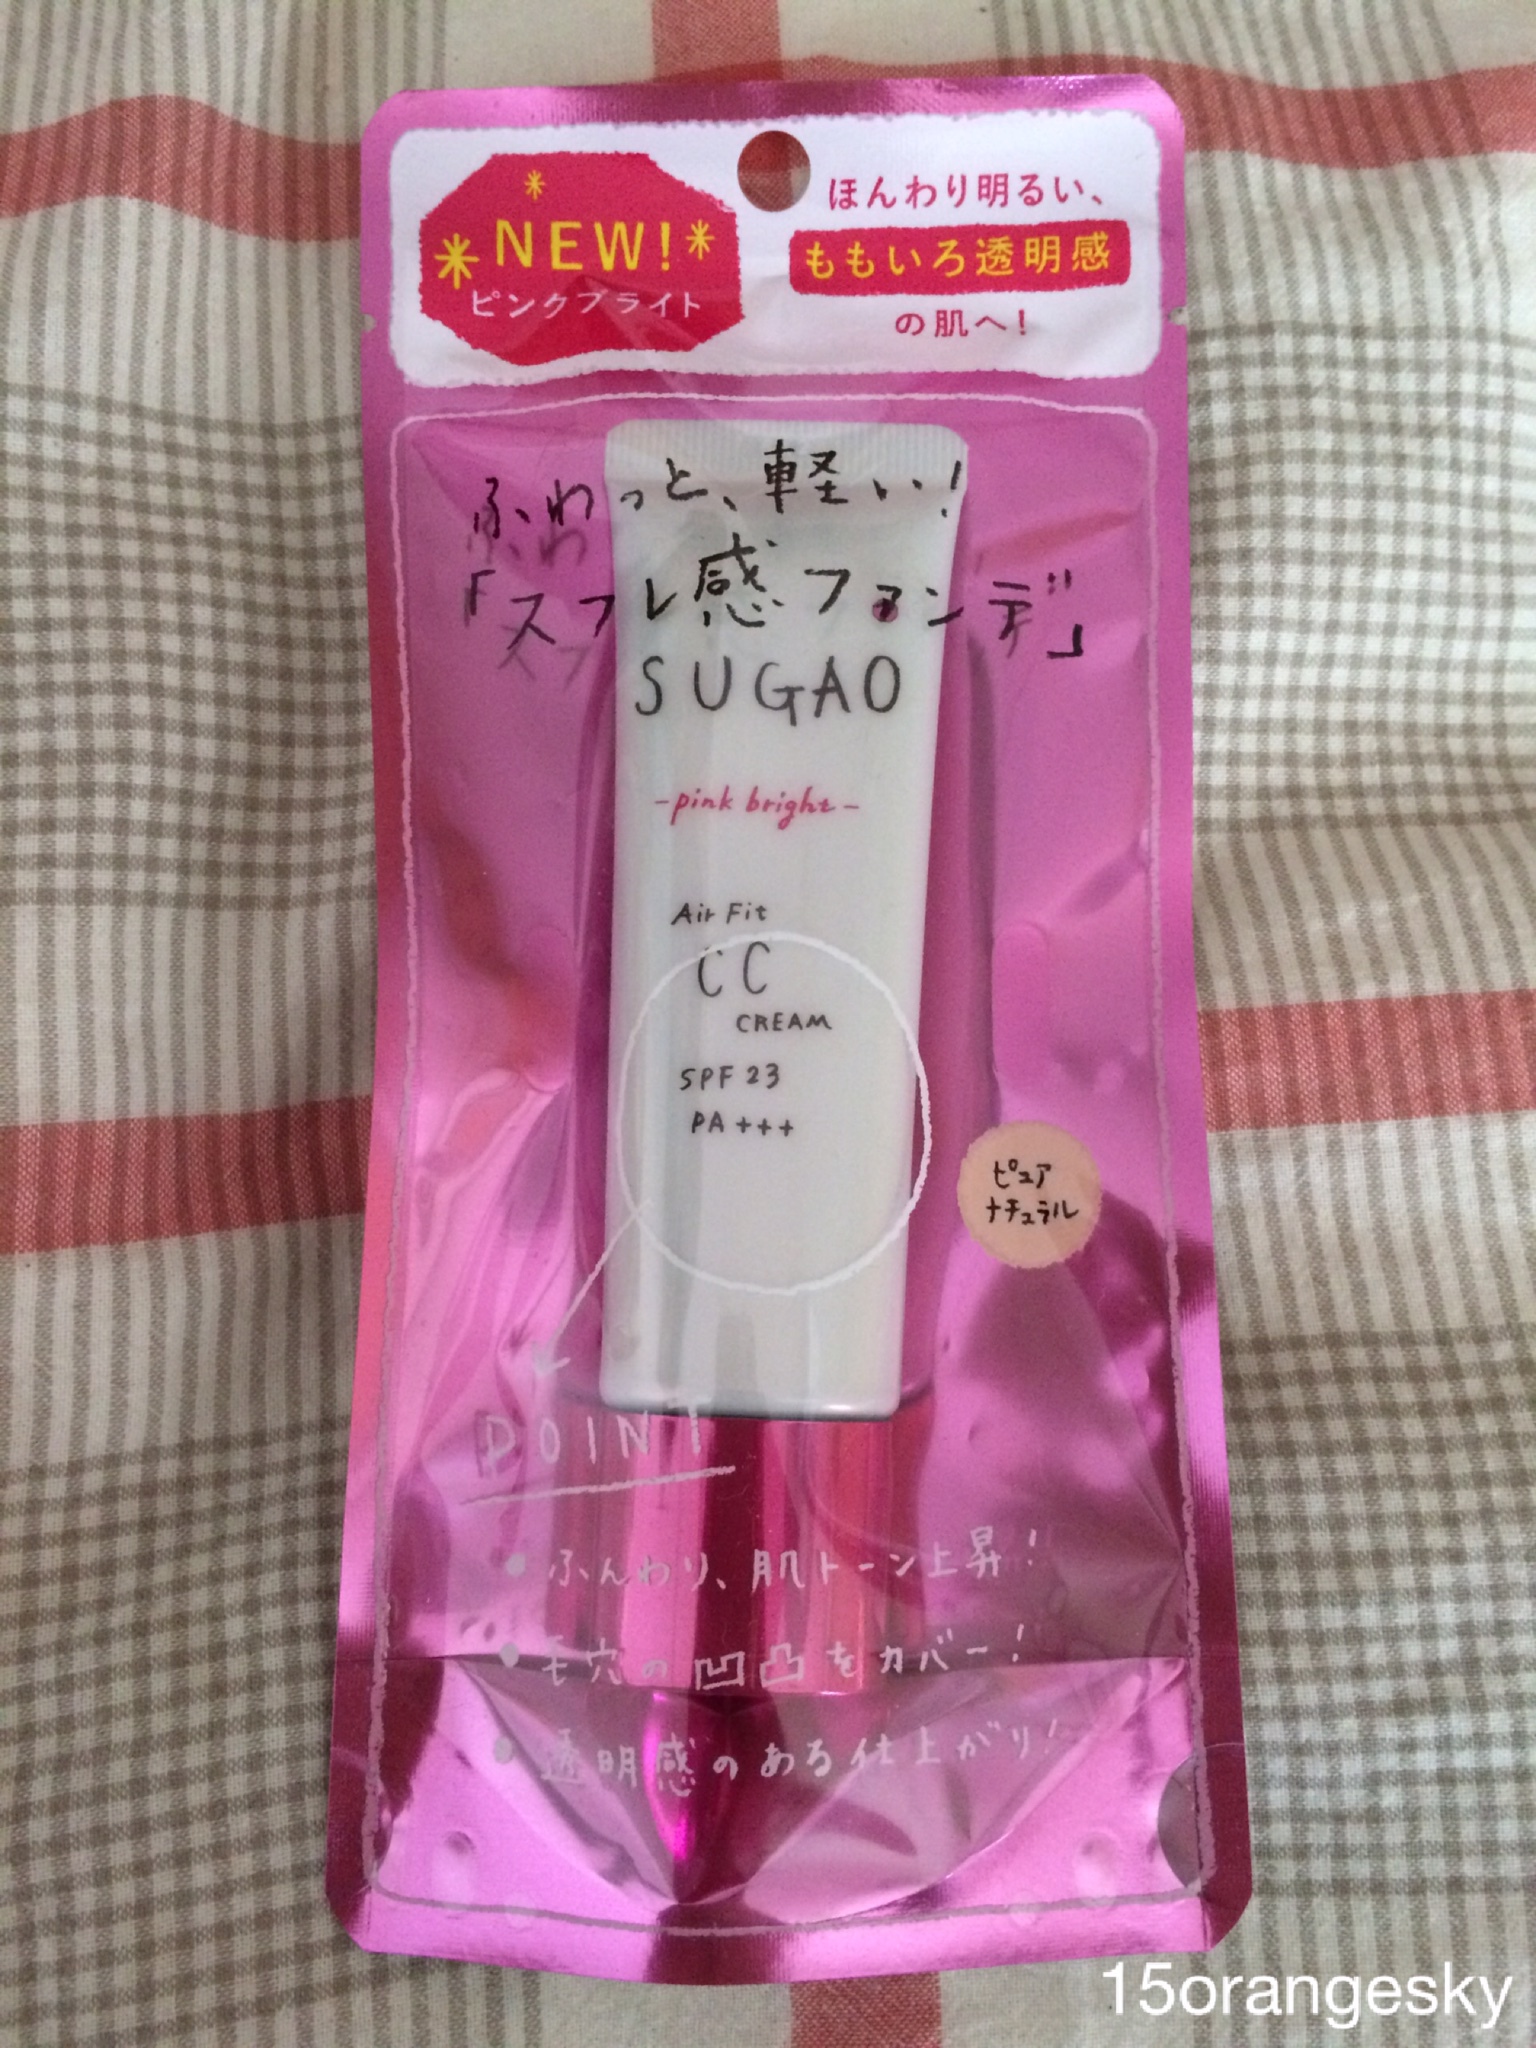 Sugao Airfitccクリーム ピンクブライトの口コミ写真 By Nekoco919さん 1枚目 美容 化粧品情報はアットコスメ